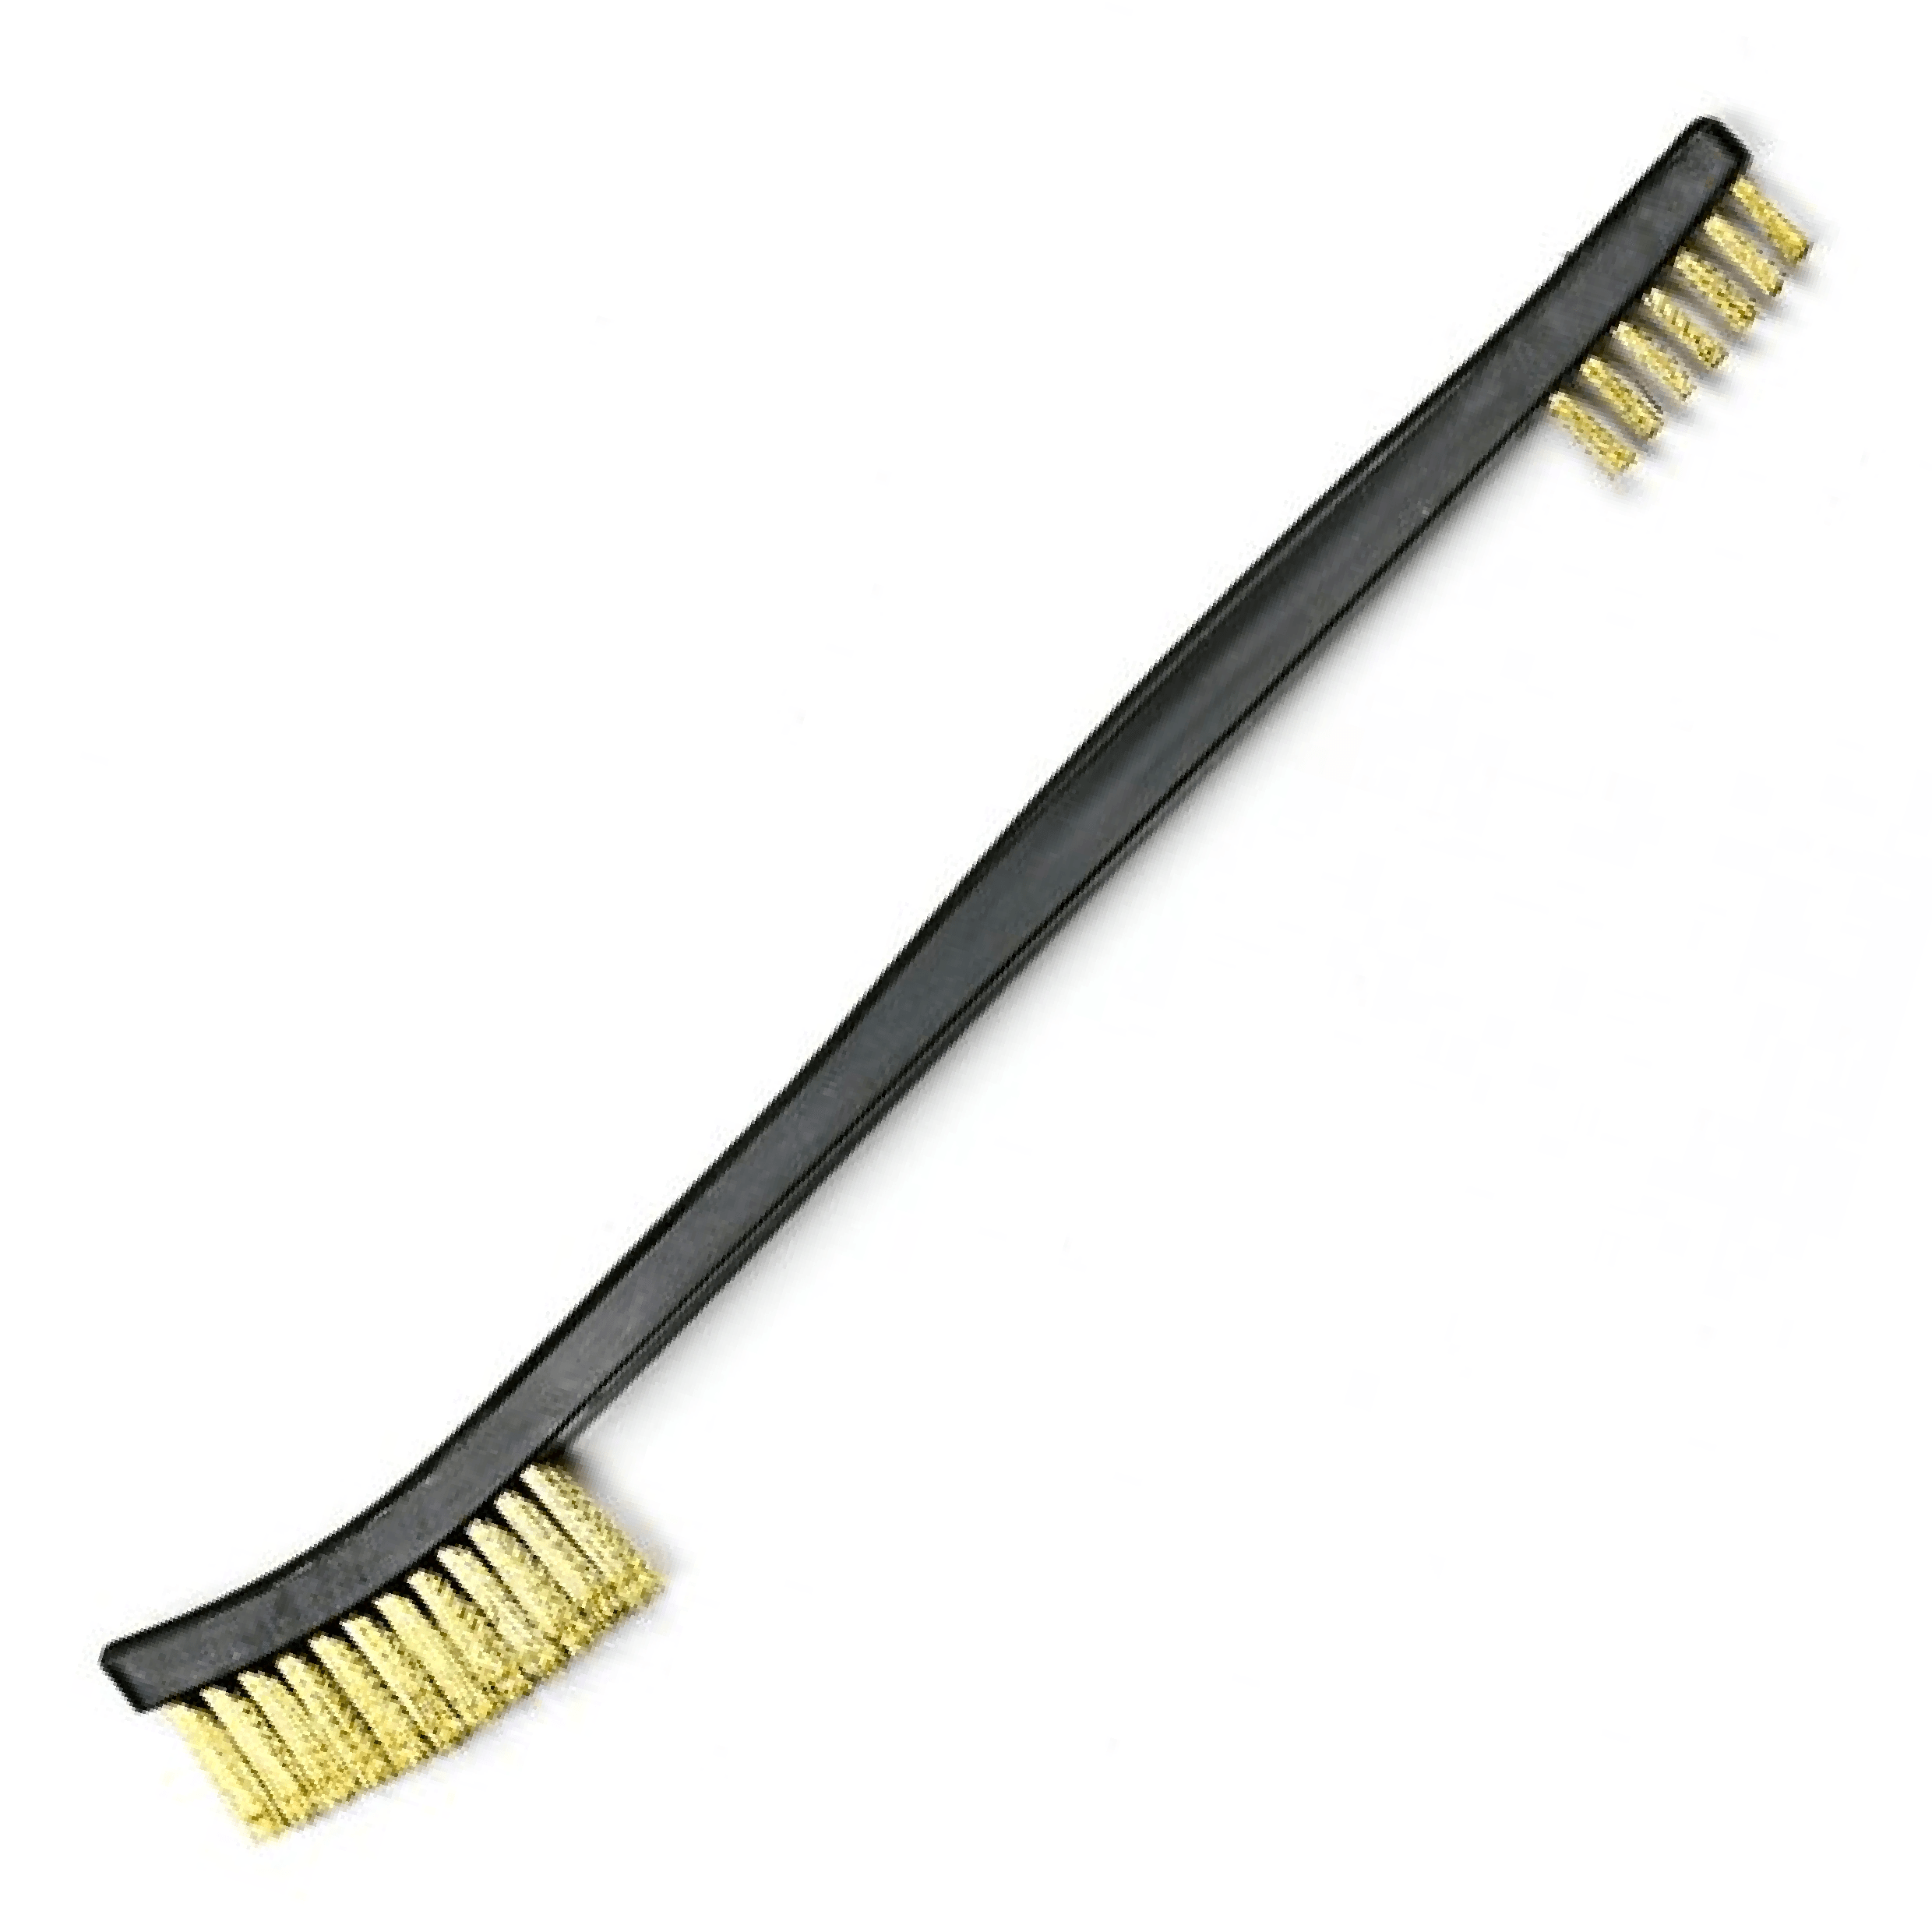 Double-Ended Brass Brush – Clenzoil